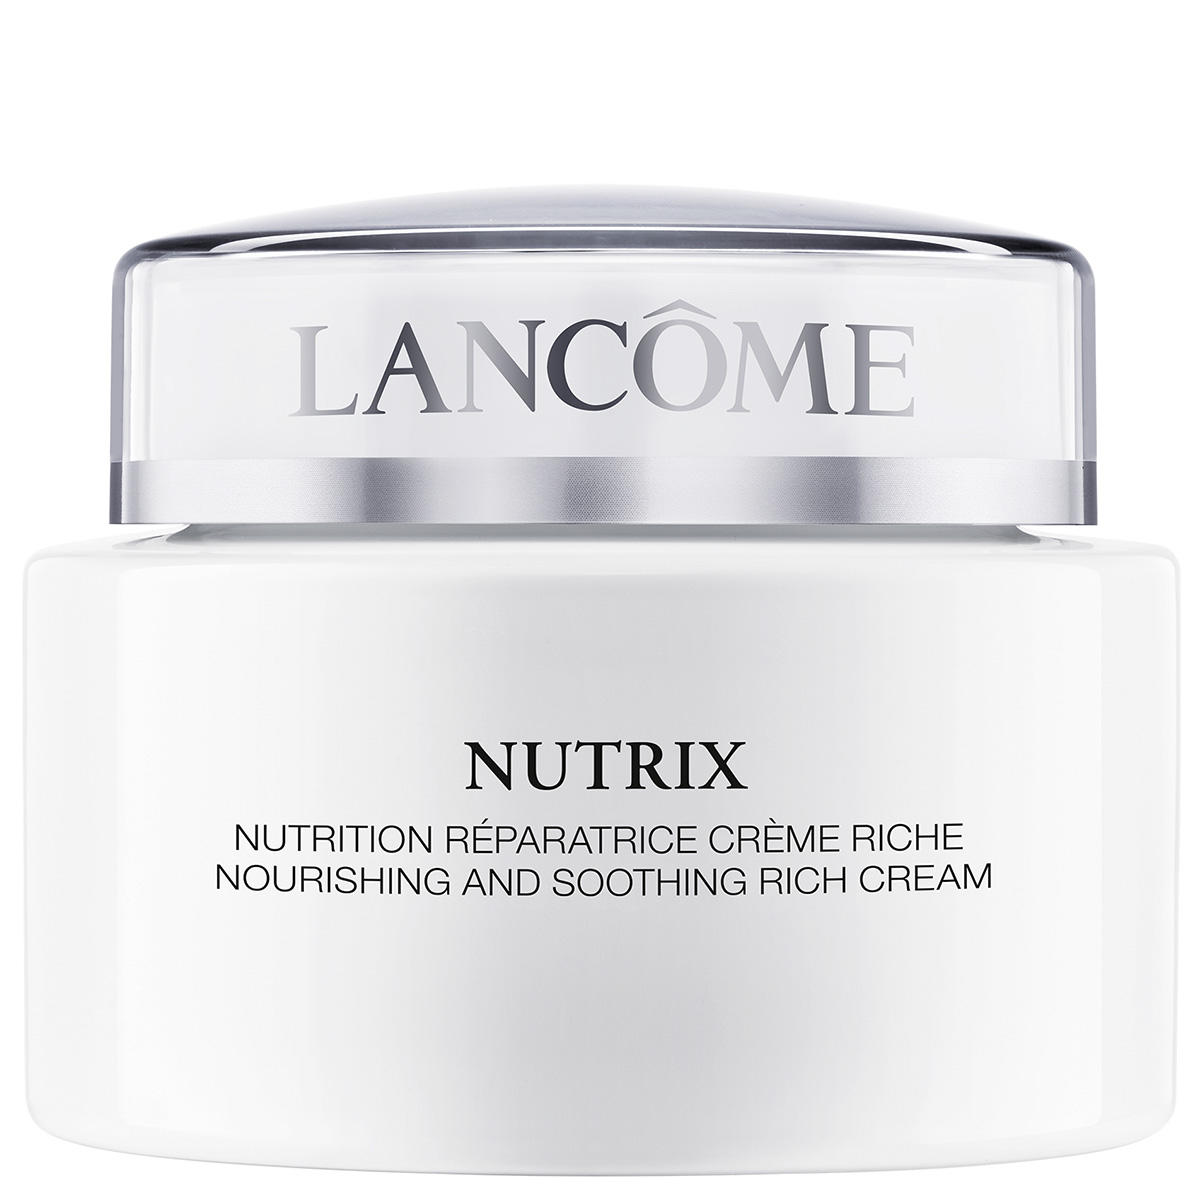 Lancôme Nutrix Nourishing and Soothing Rich Cream 75 ml - 1